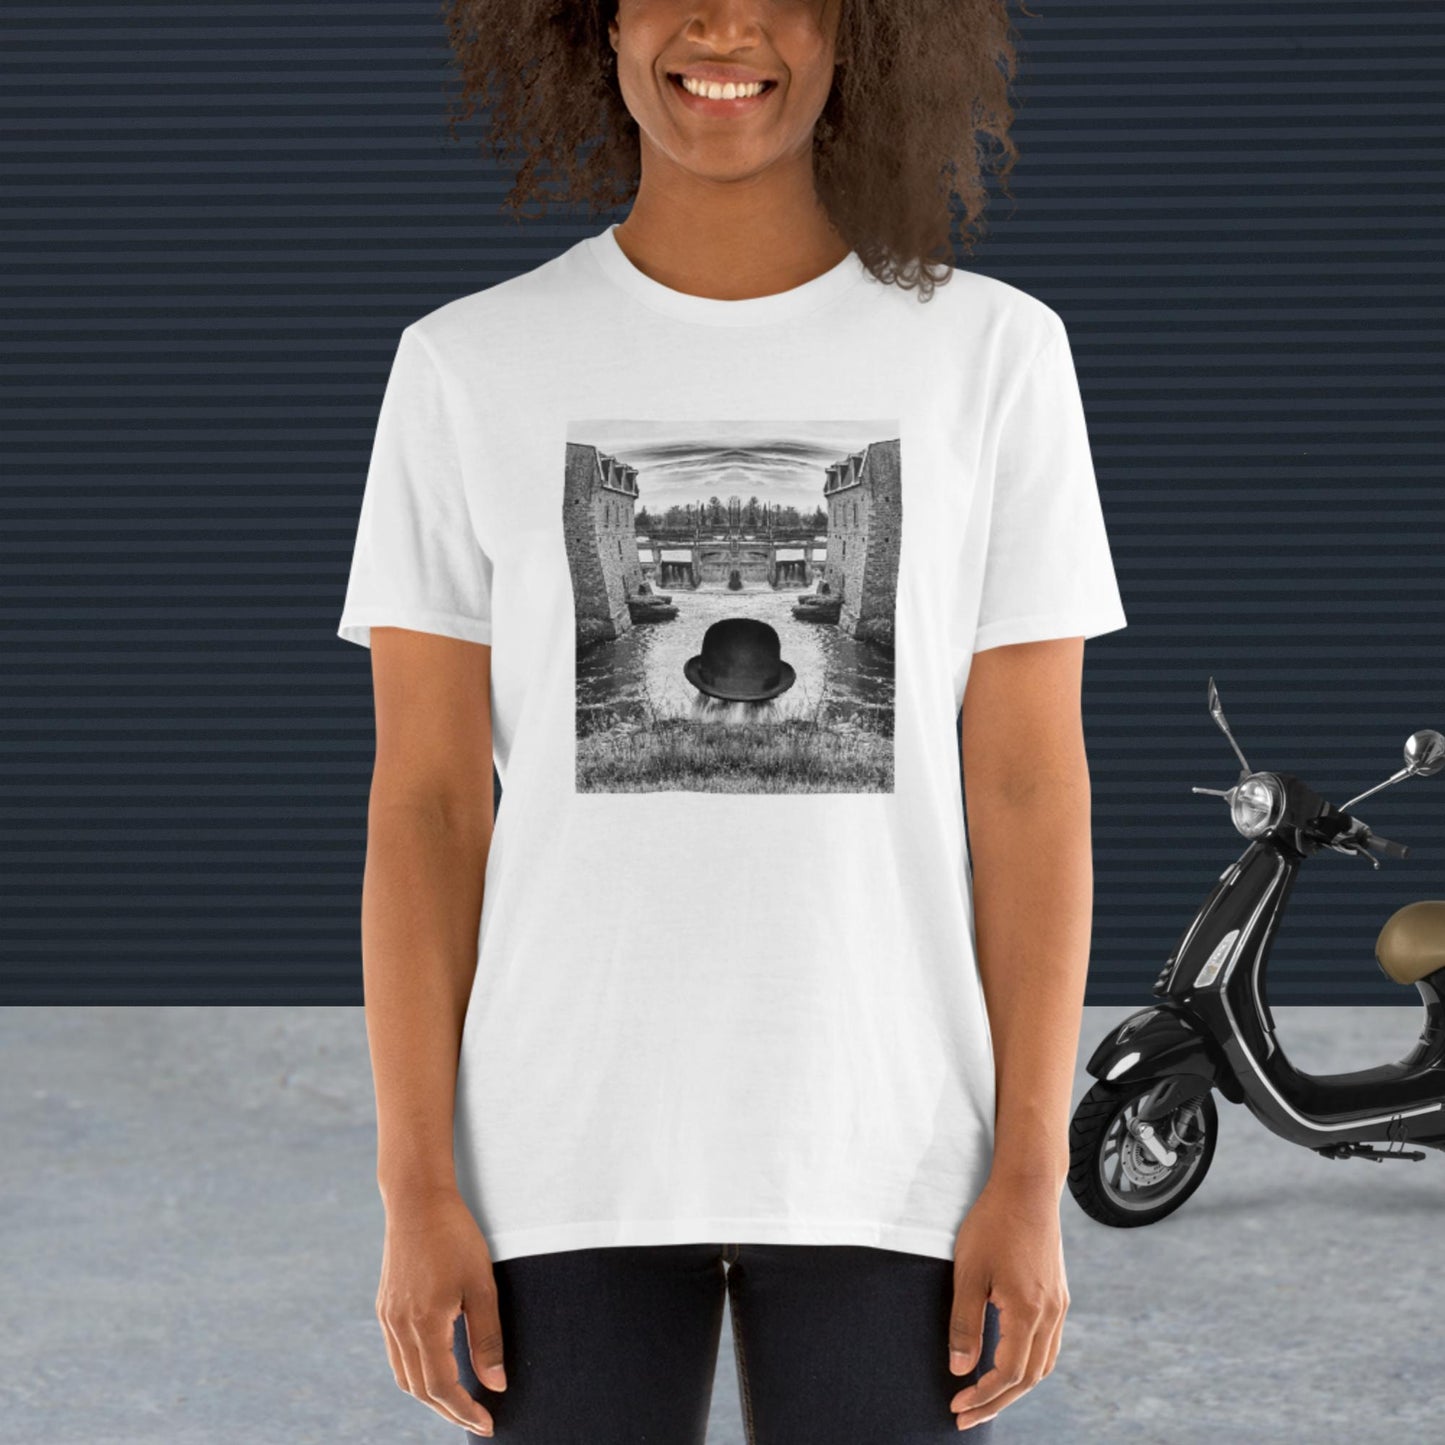 'That's Dam Surreal' Short-Sleeve Unisex T-Shirt